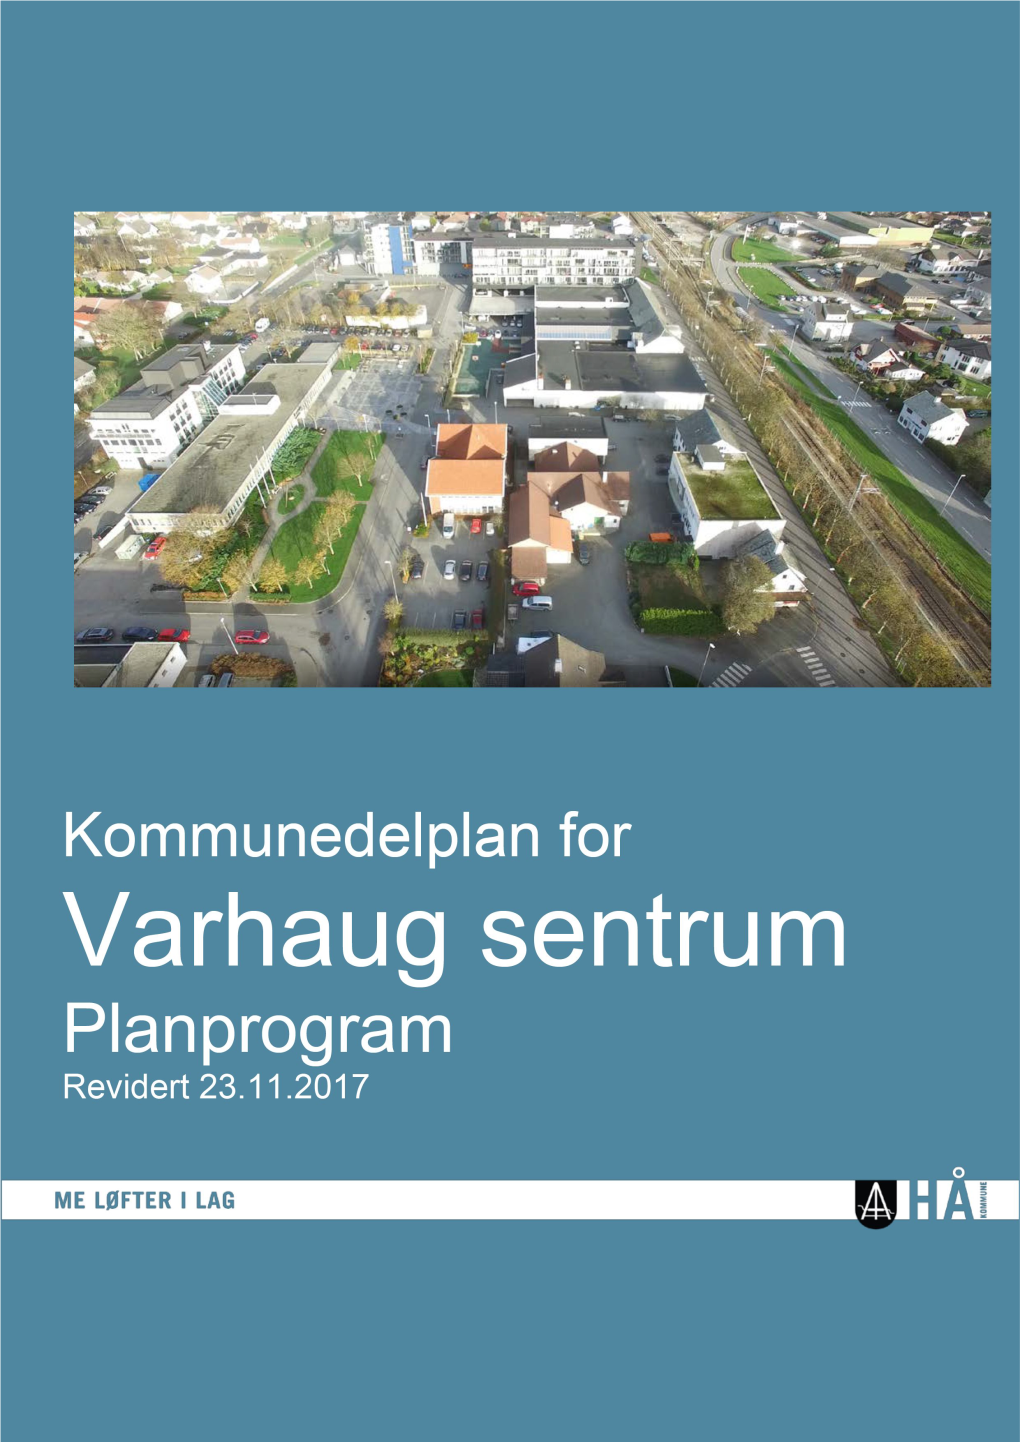 Varhaug Sentrum Planprogram Revidert 23.11.2017